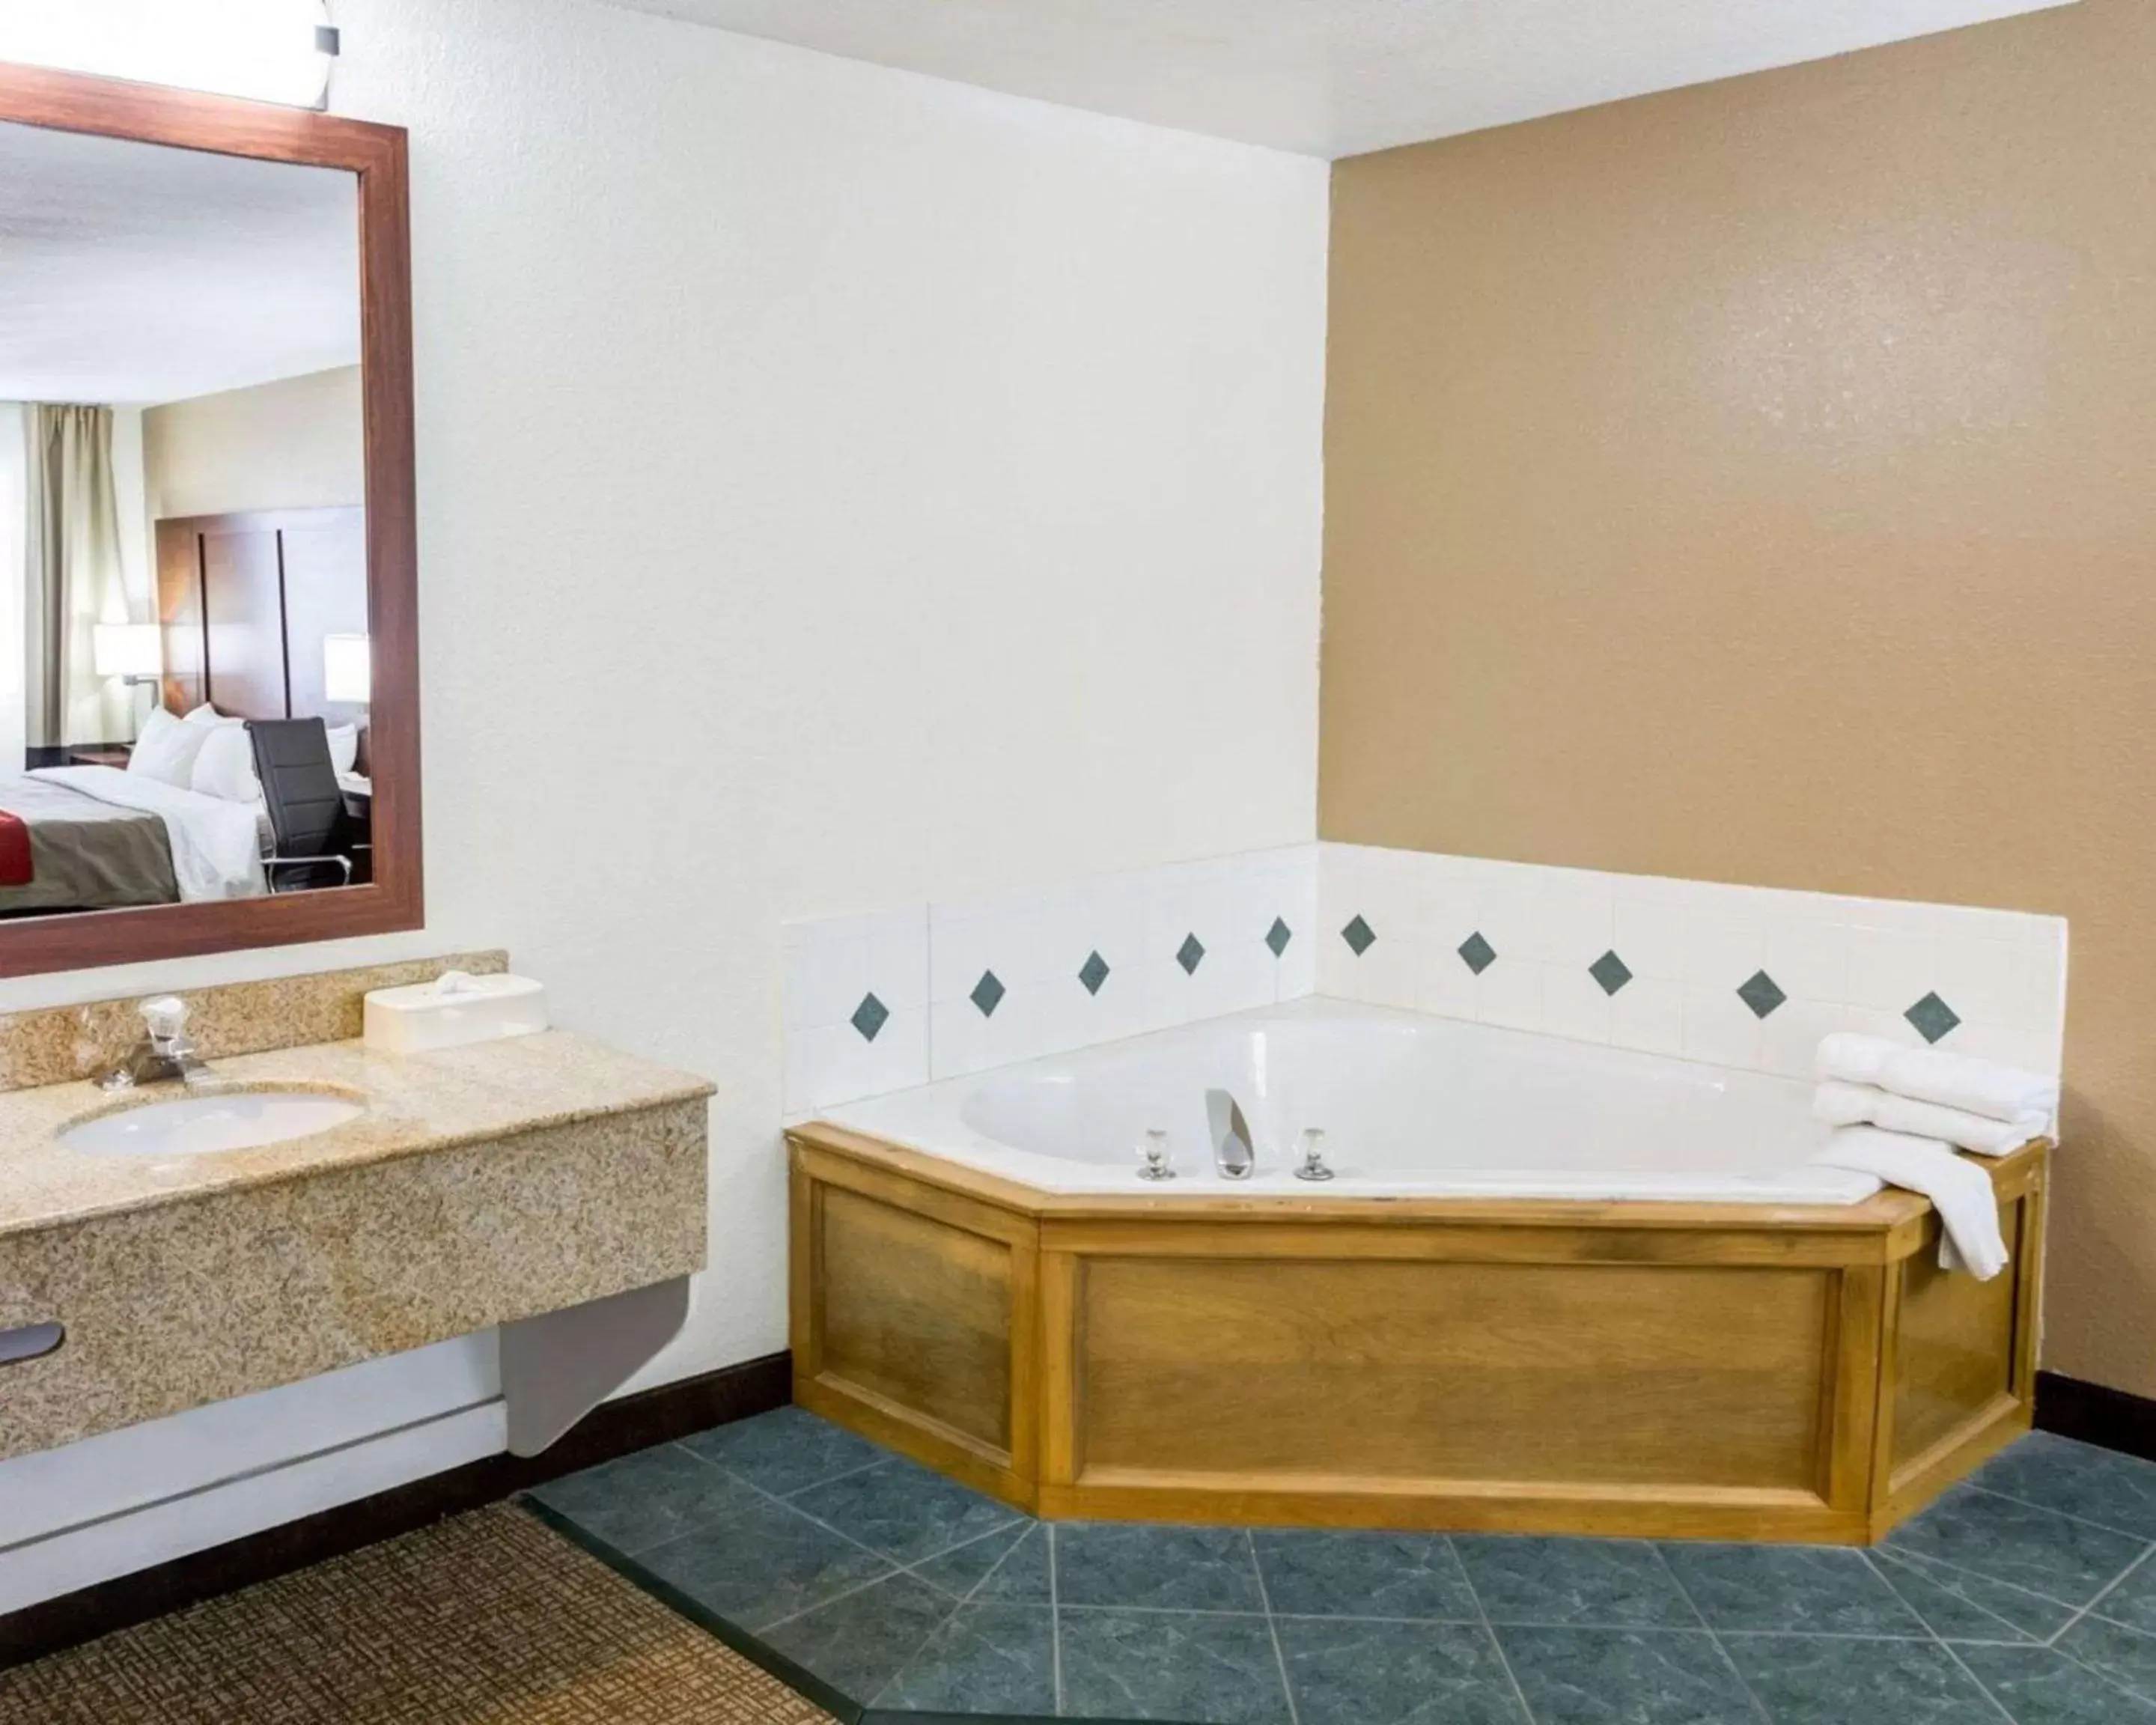 Photo of the whole room, Bathroom in Comfort Inn Kearney - Liberty